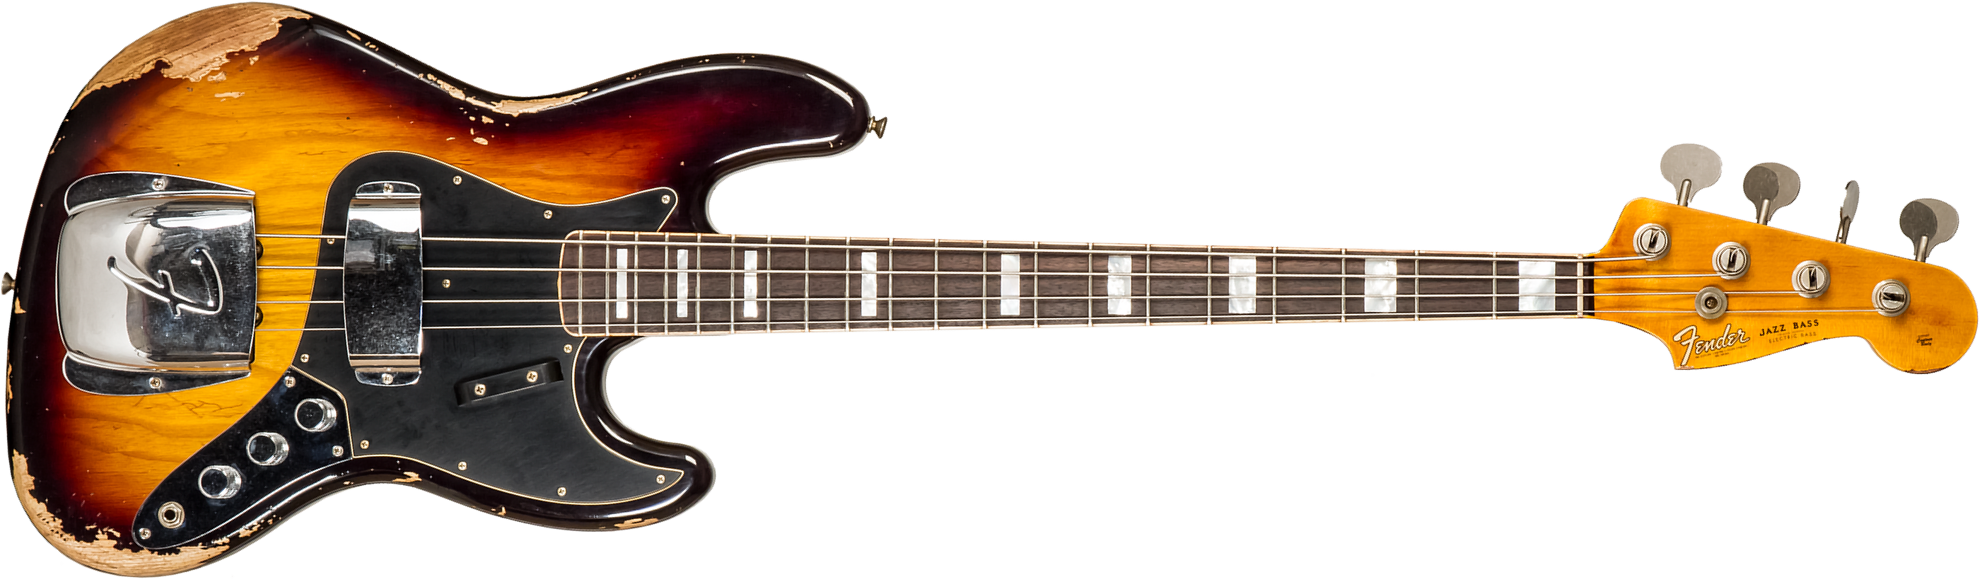 Fender Custom Shop Jazz Bass Custom Rw #cz575919 - Heavy Relic 3-color Sunburst - Solid body elektrische bas - Main picture